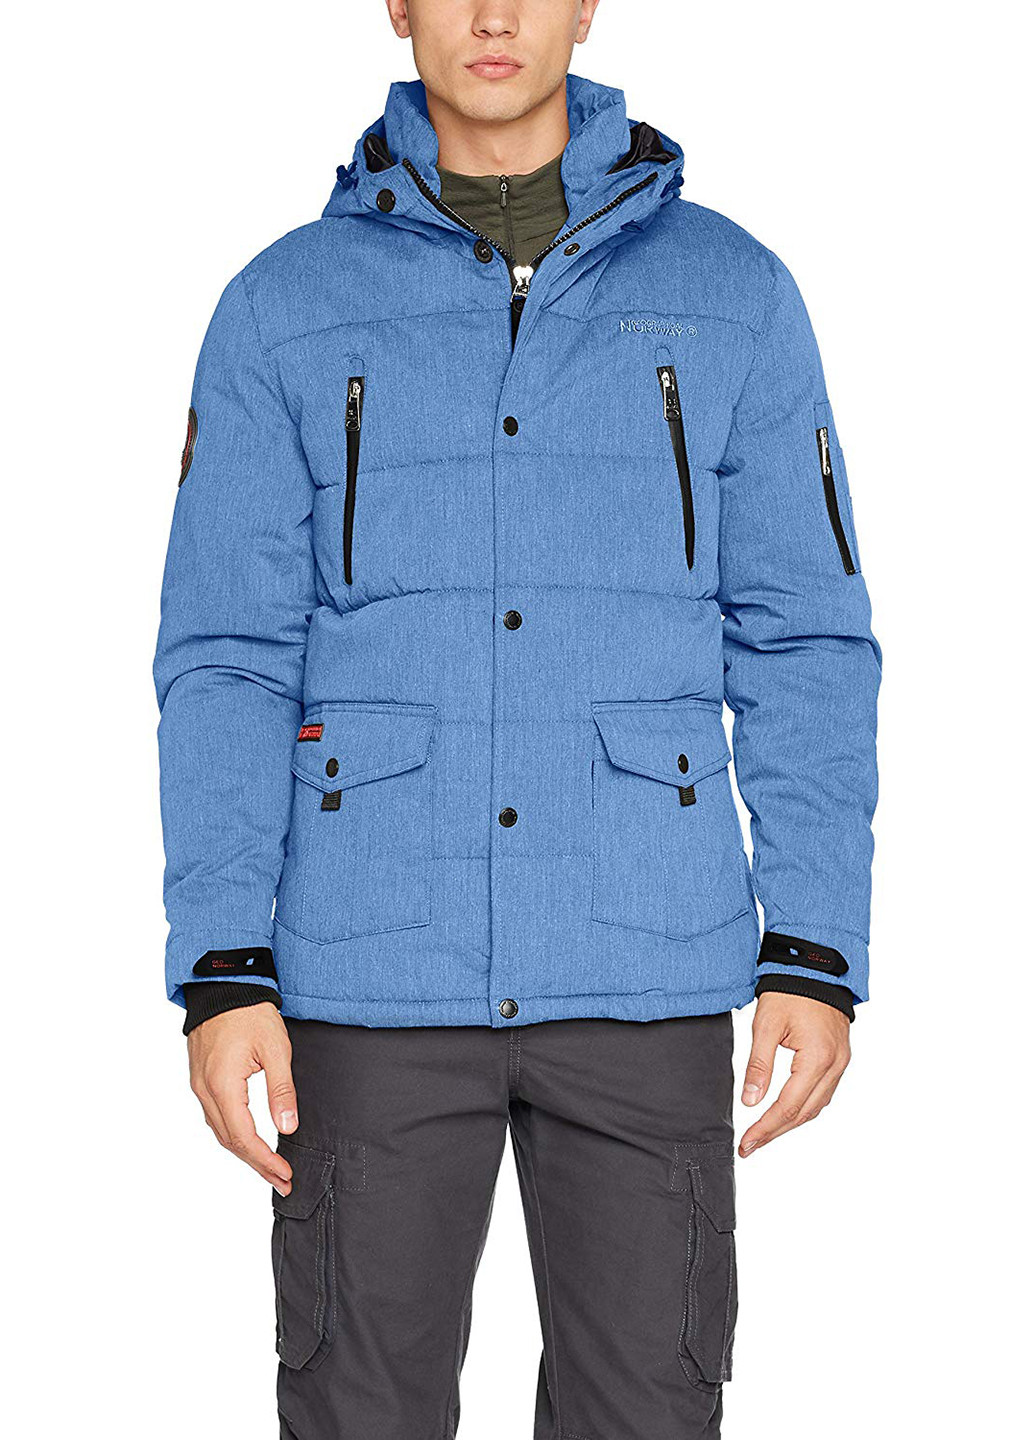 Голубая зимняя куртка Geographical Norway